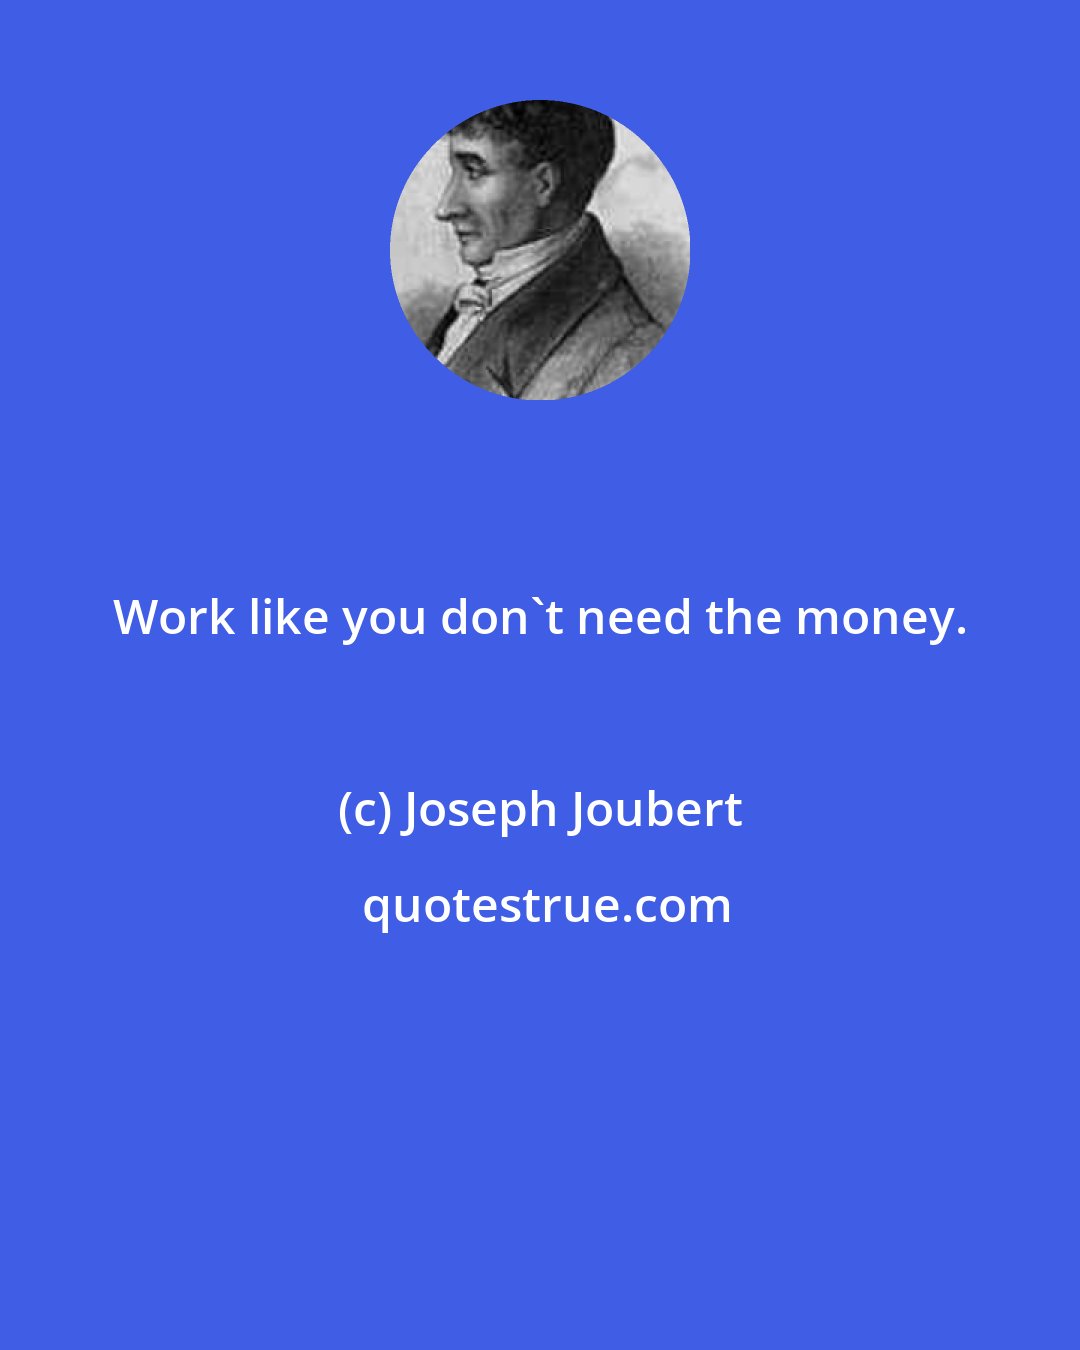 Joseph Joubert: Work like you don't need the money.